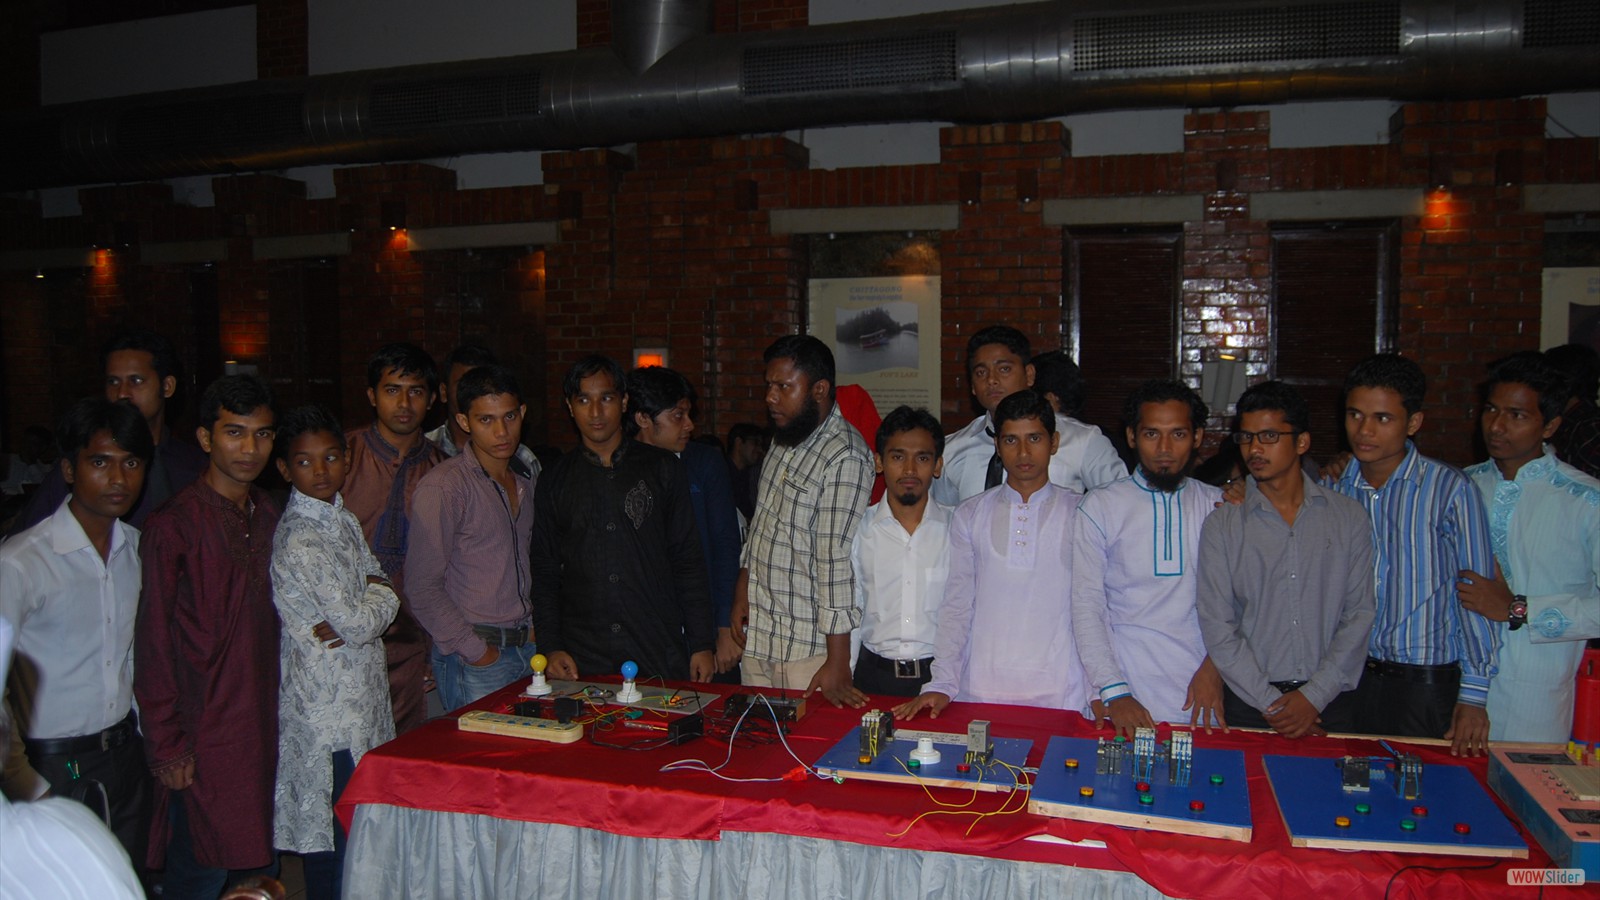 Project Presentaion-2014 at Hotel Abrosia, Agrabad, Chattogram